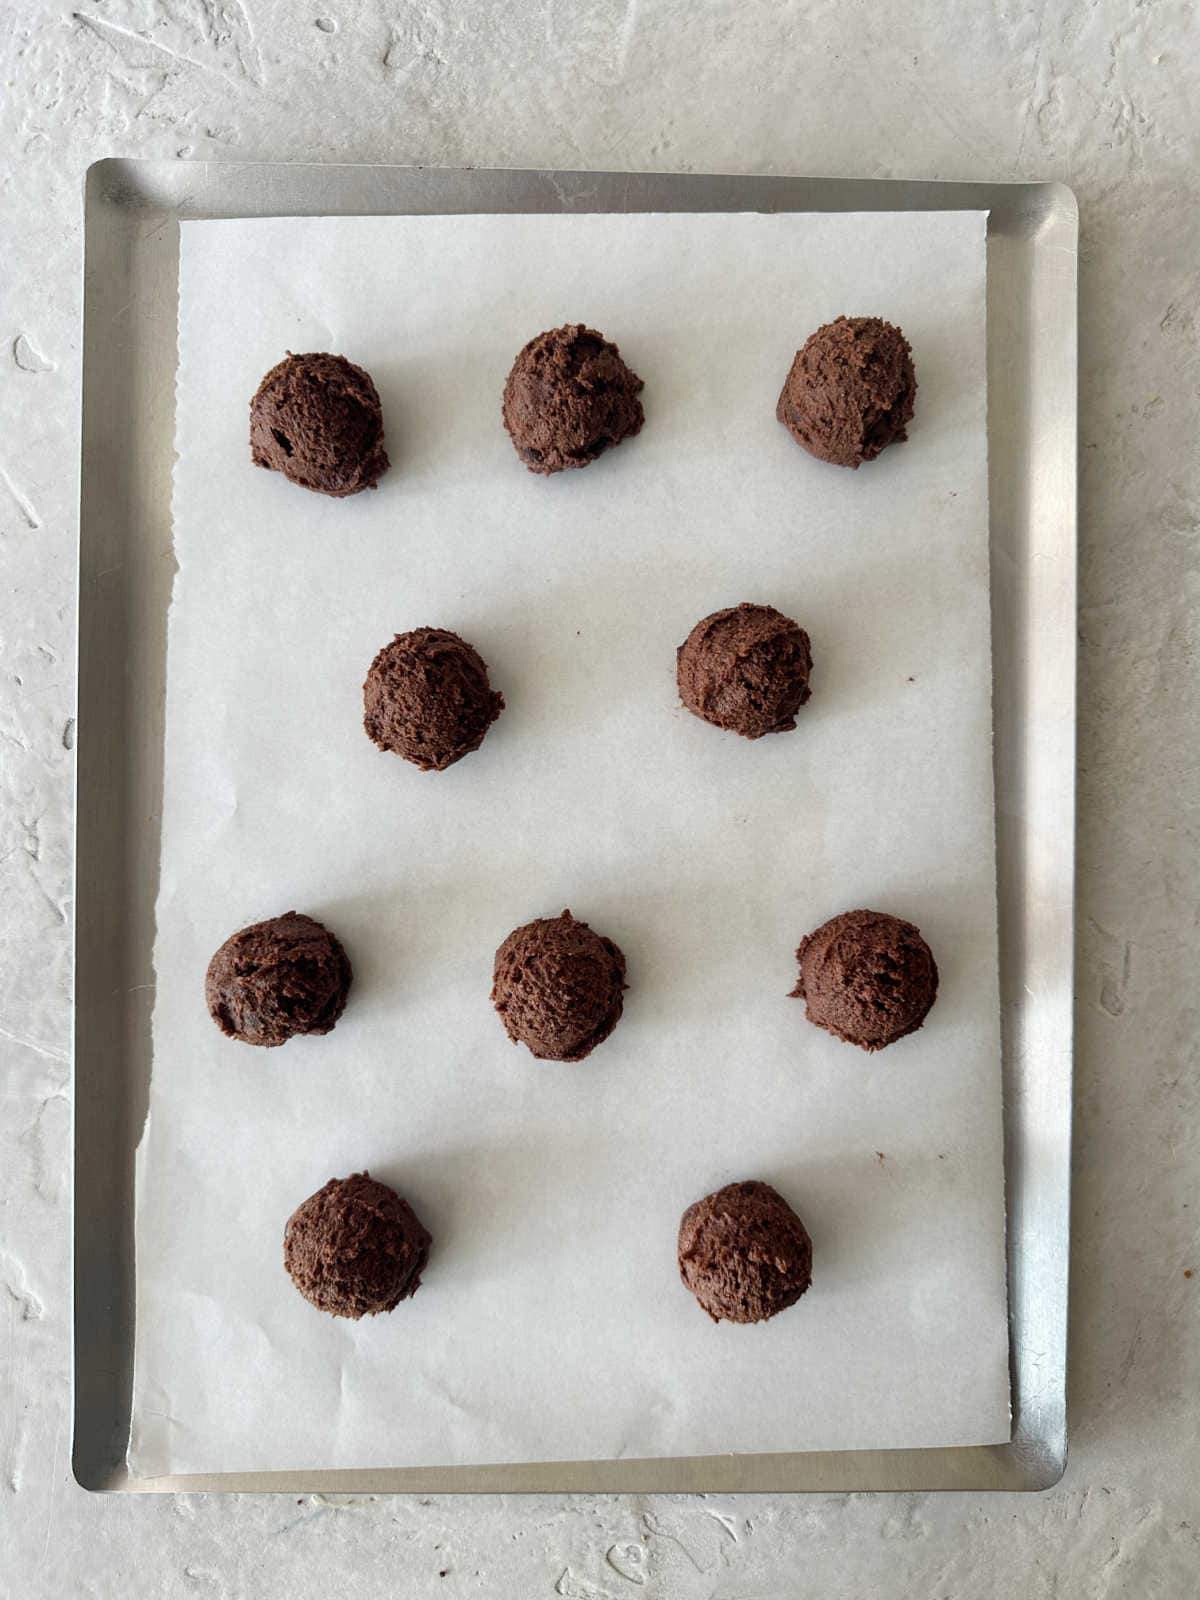 Metal baking sheet with chocolate cookie dough balls. Top view.